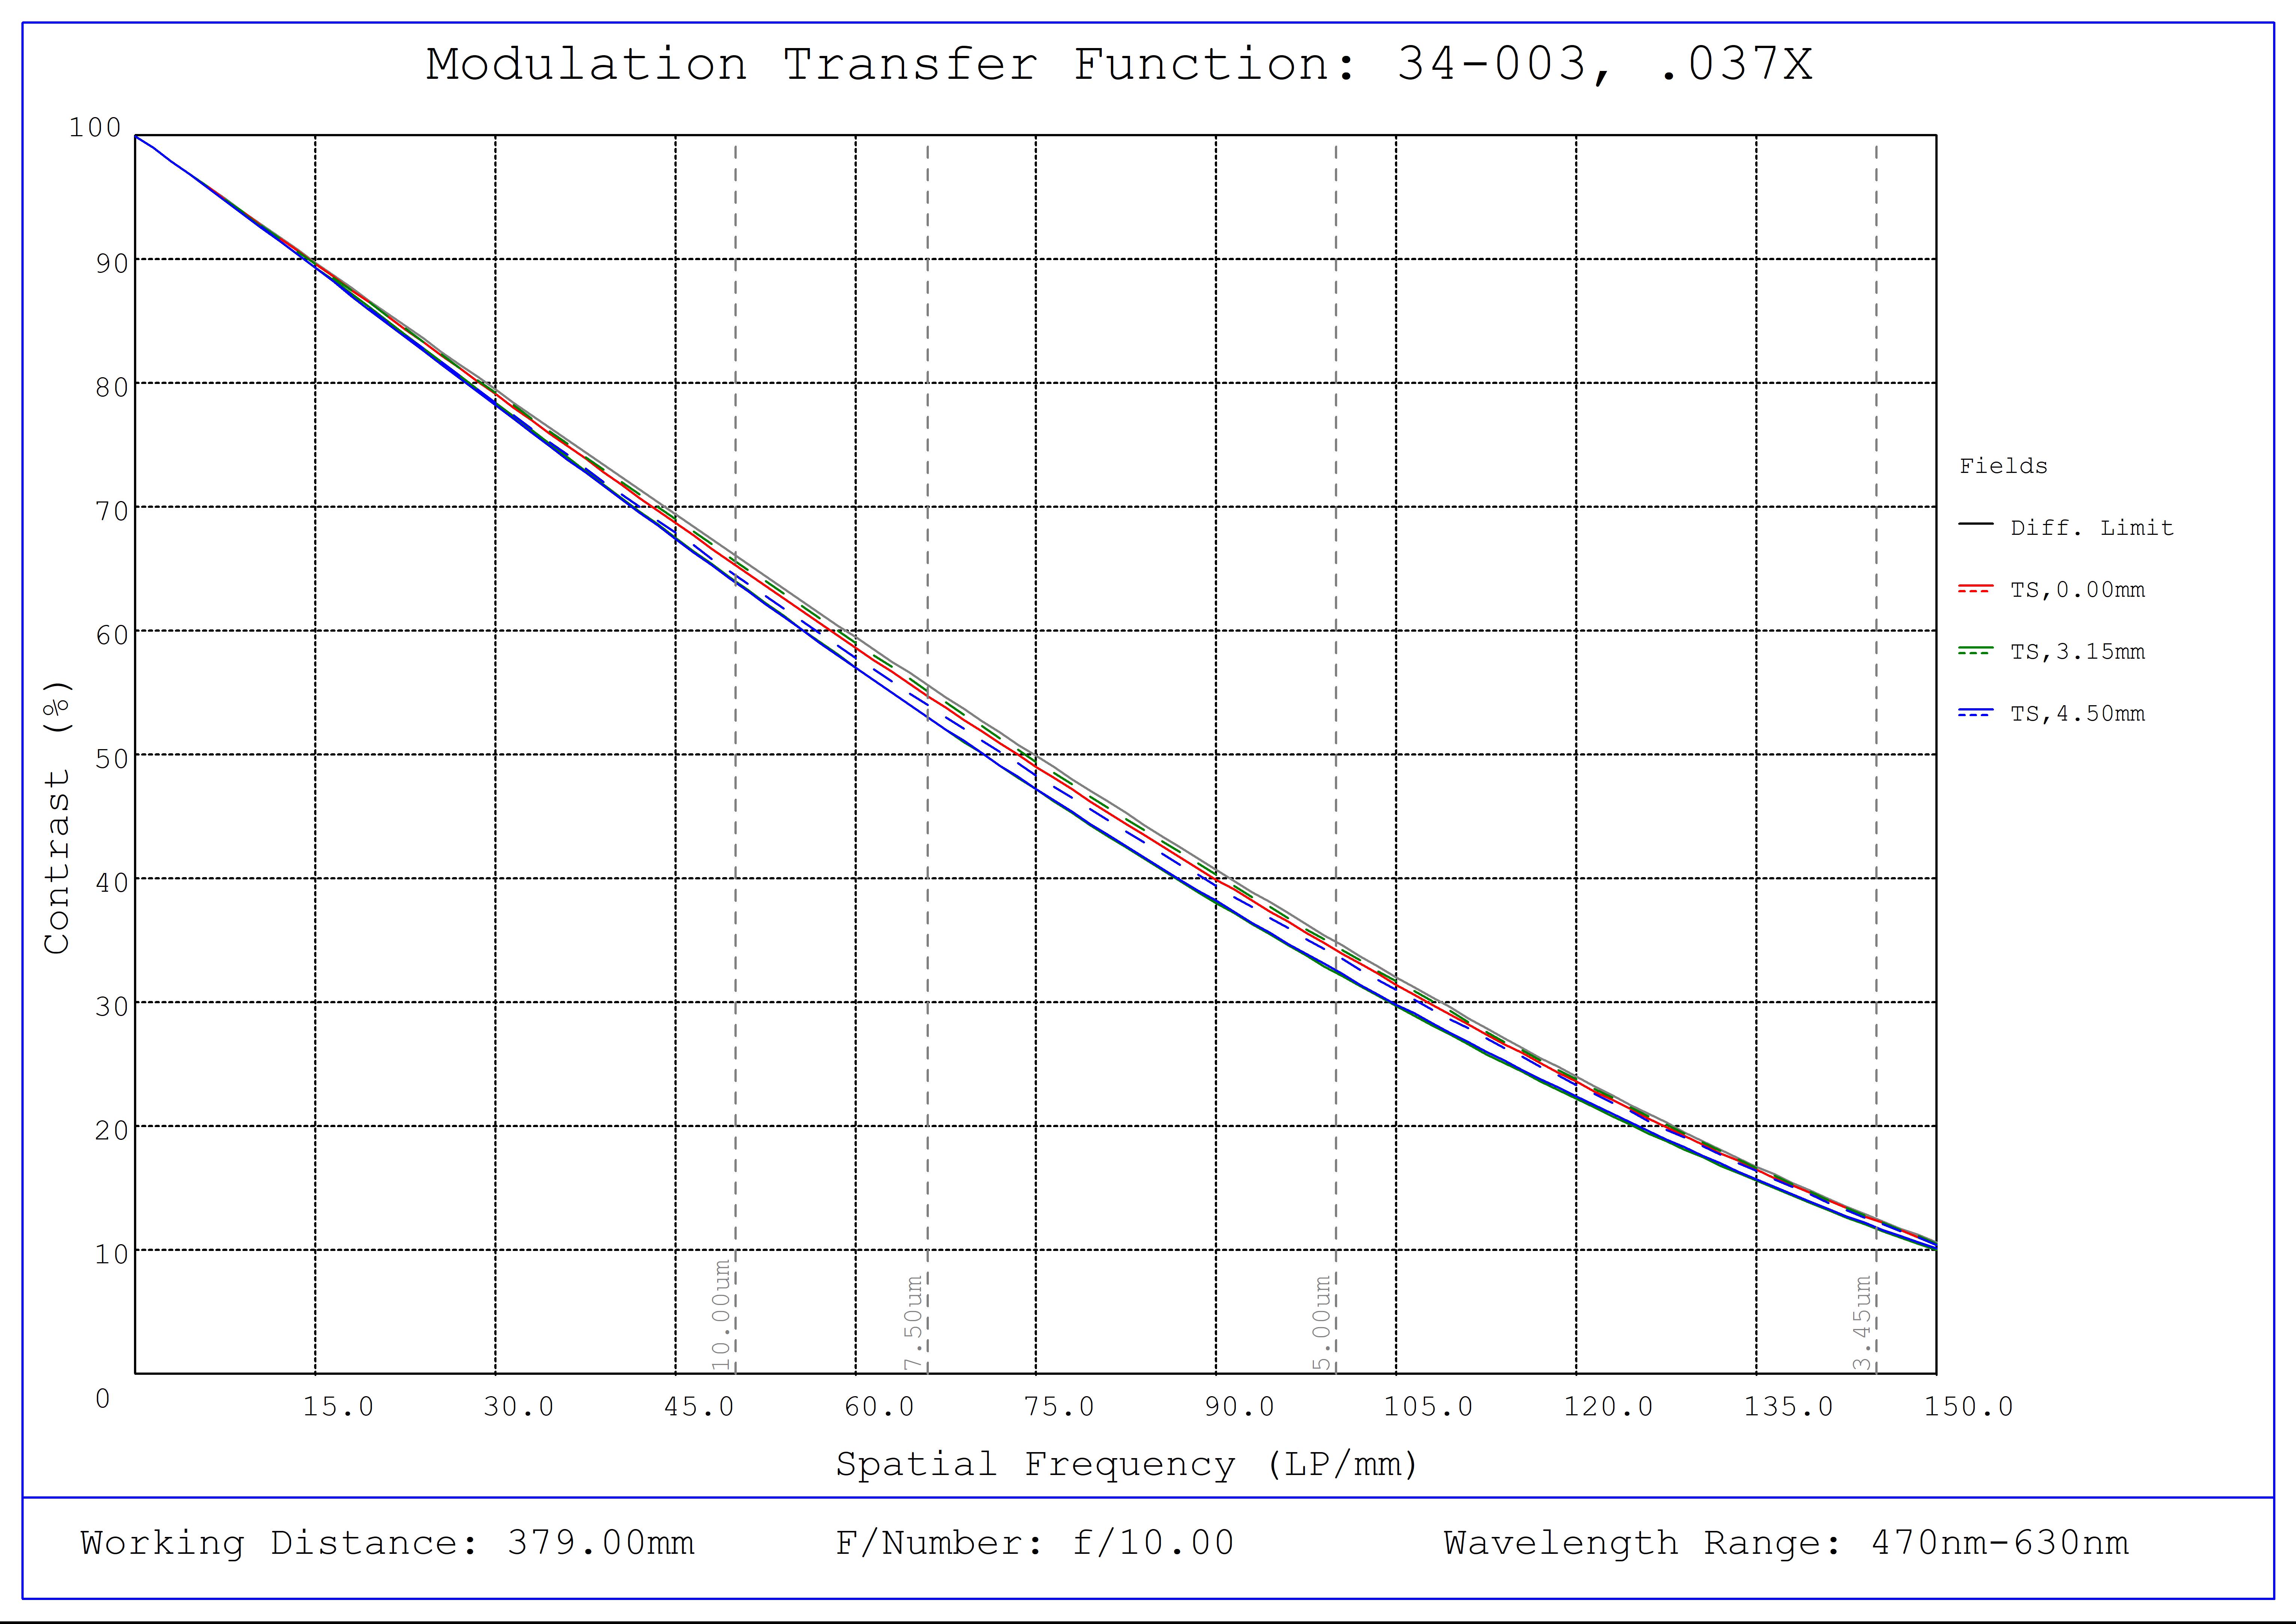 #34-003, 0.037X, 1/1.8" C-Mount TitanTL® Telecentric Lens, Modulated Transfer Function (MTF) Plot, 379mm Working Distance, f10